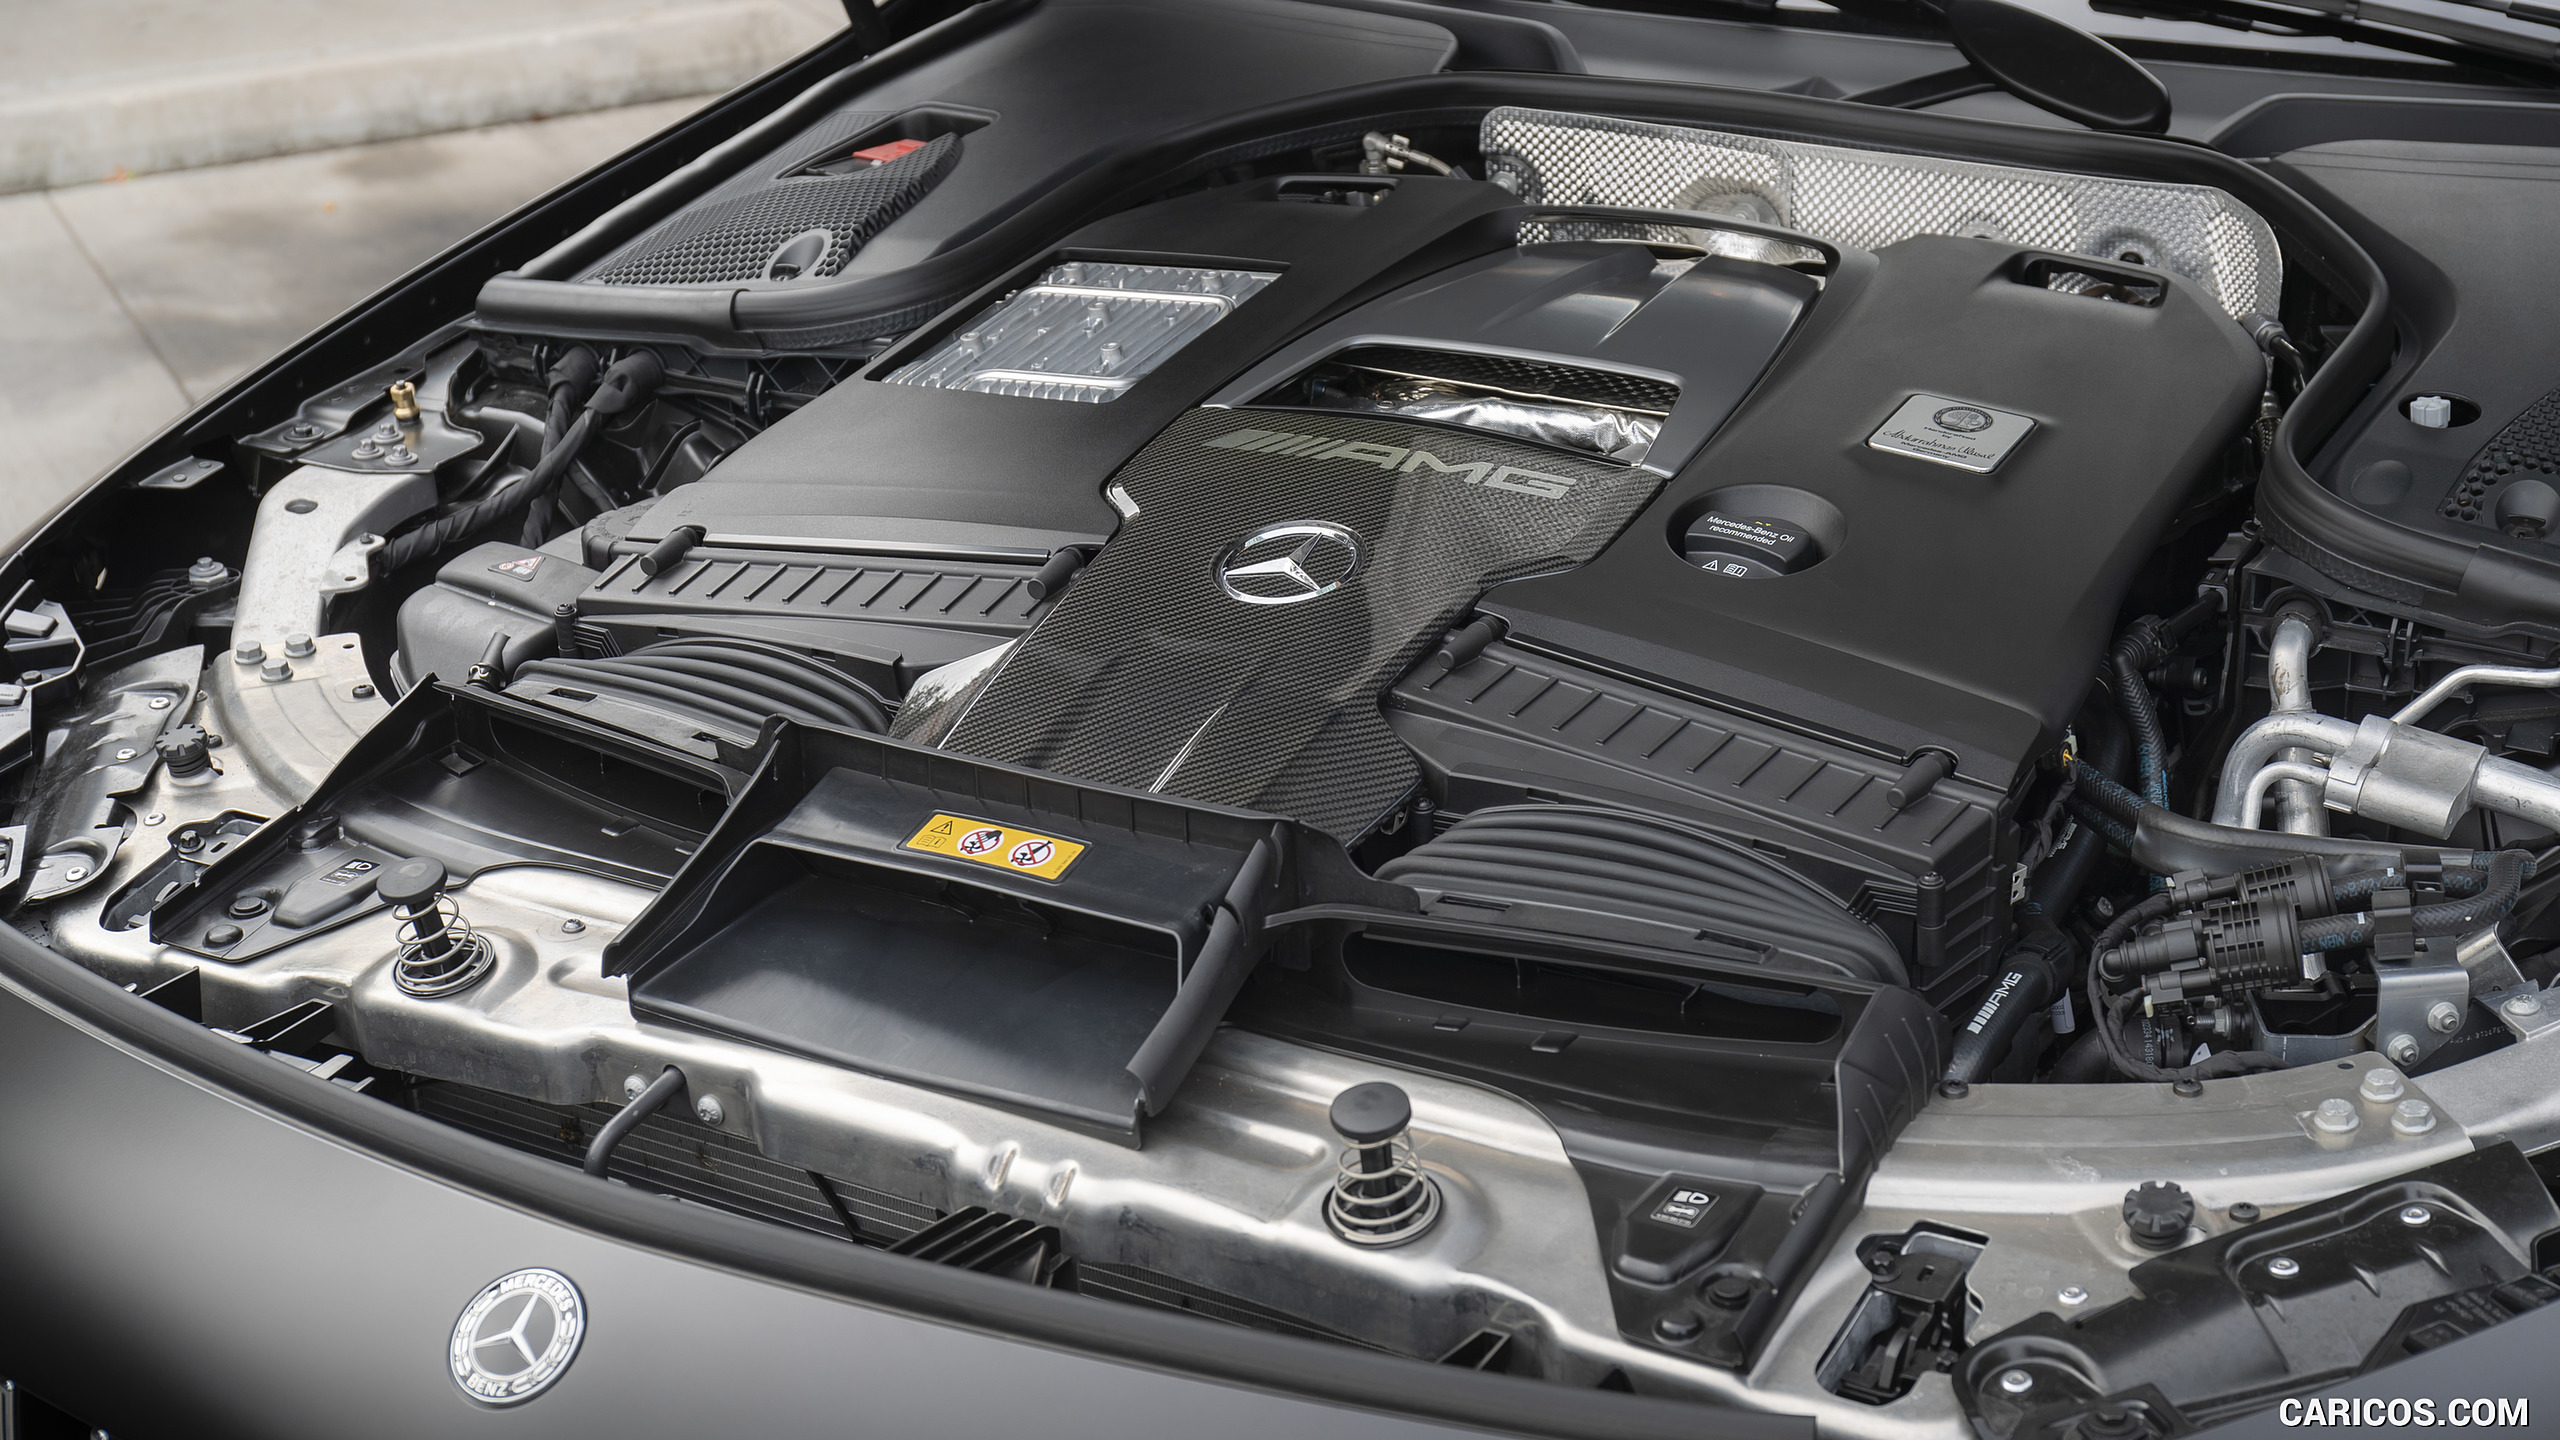 2019 Mercedes-AMG GT 63 S 4MATIC+ 4-Door Coupe - Engine, #228 of 427